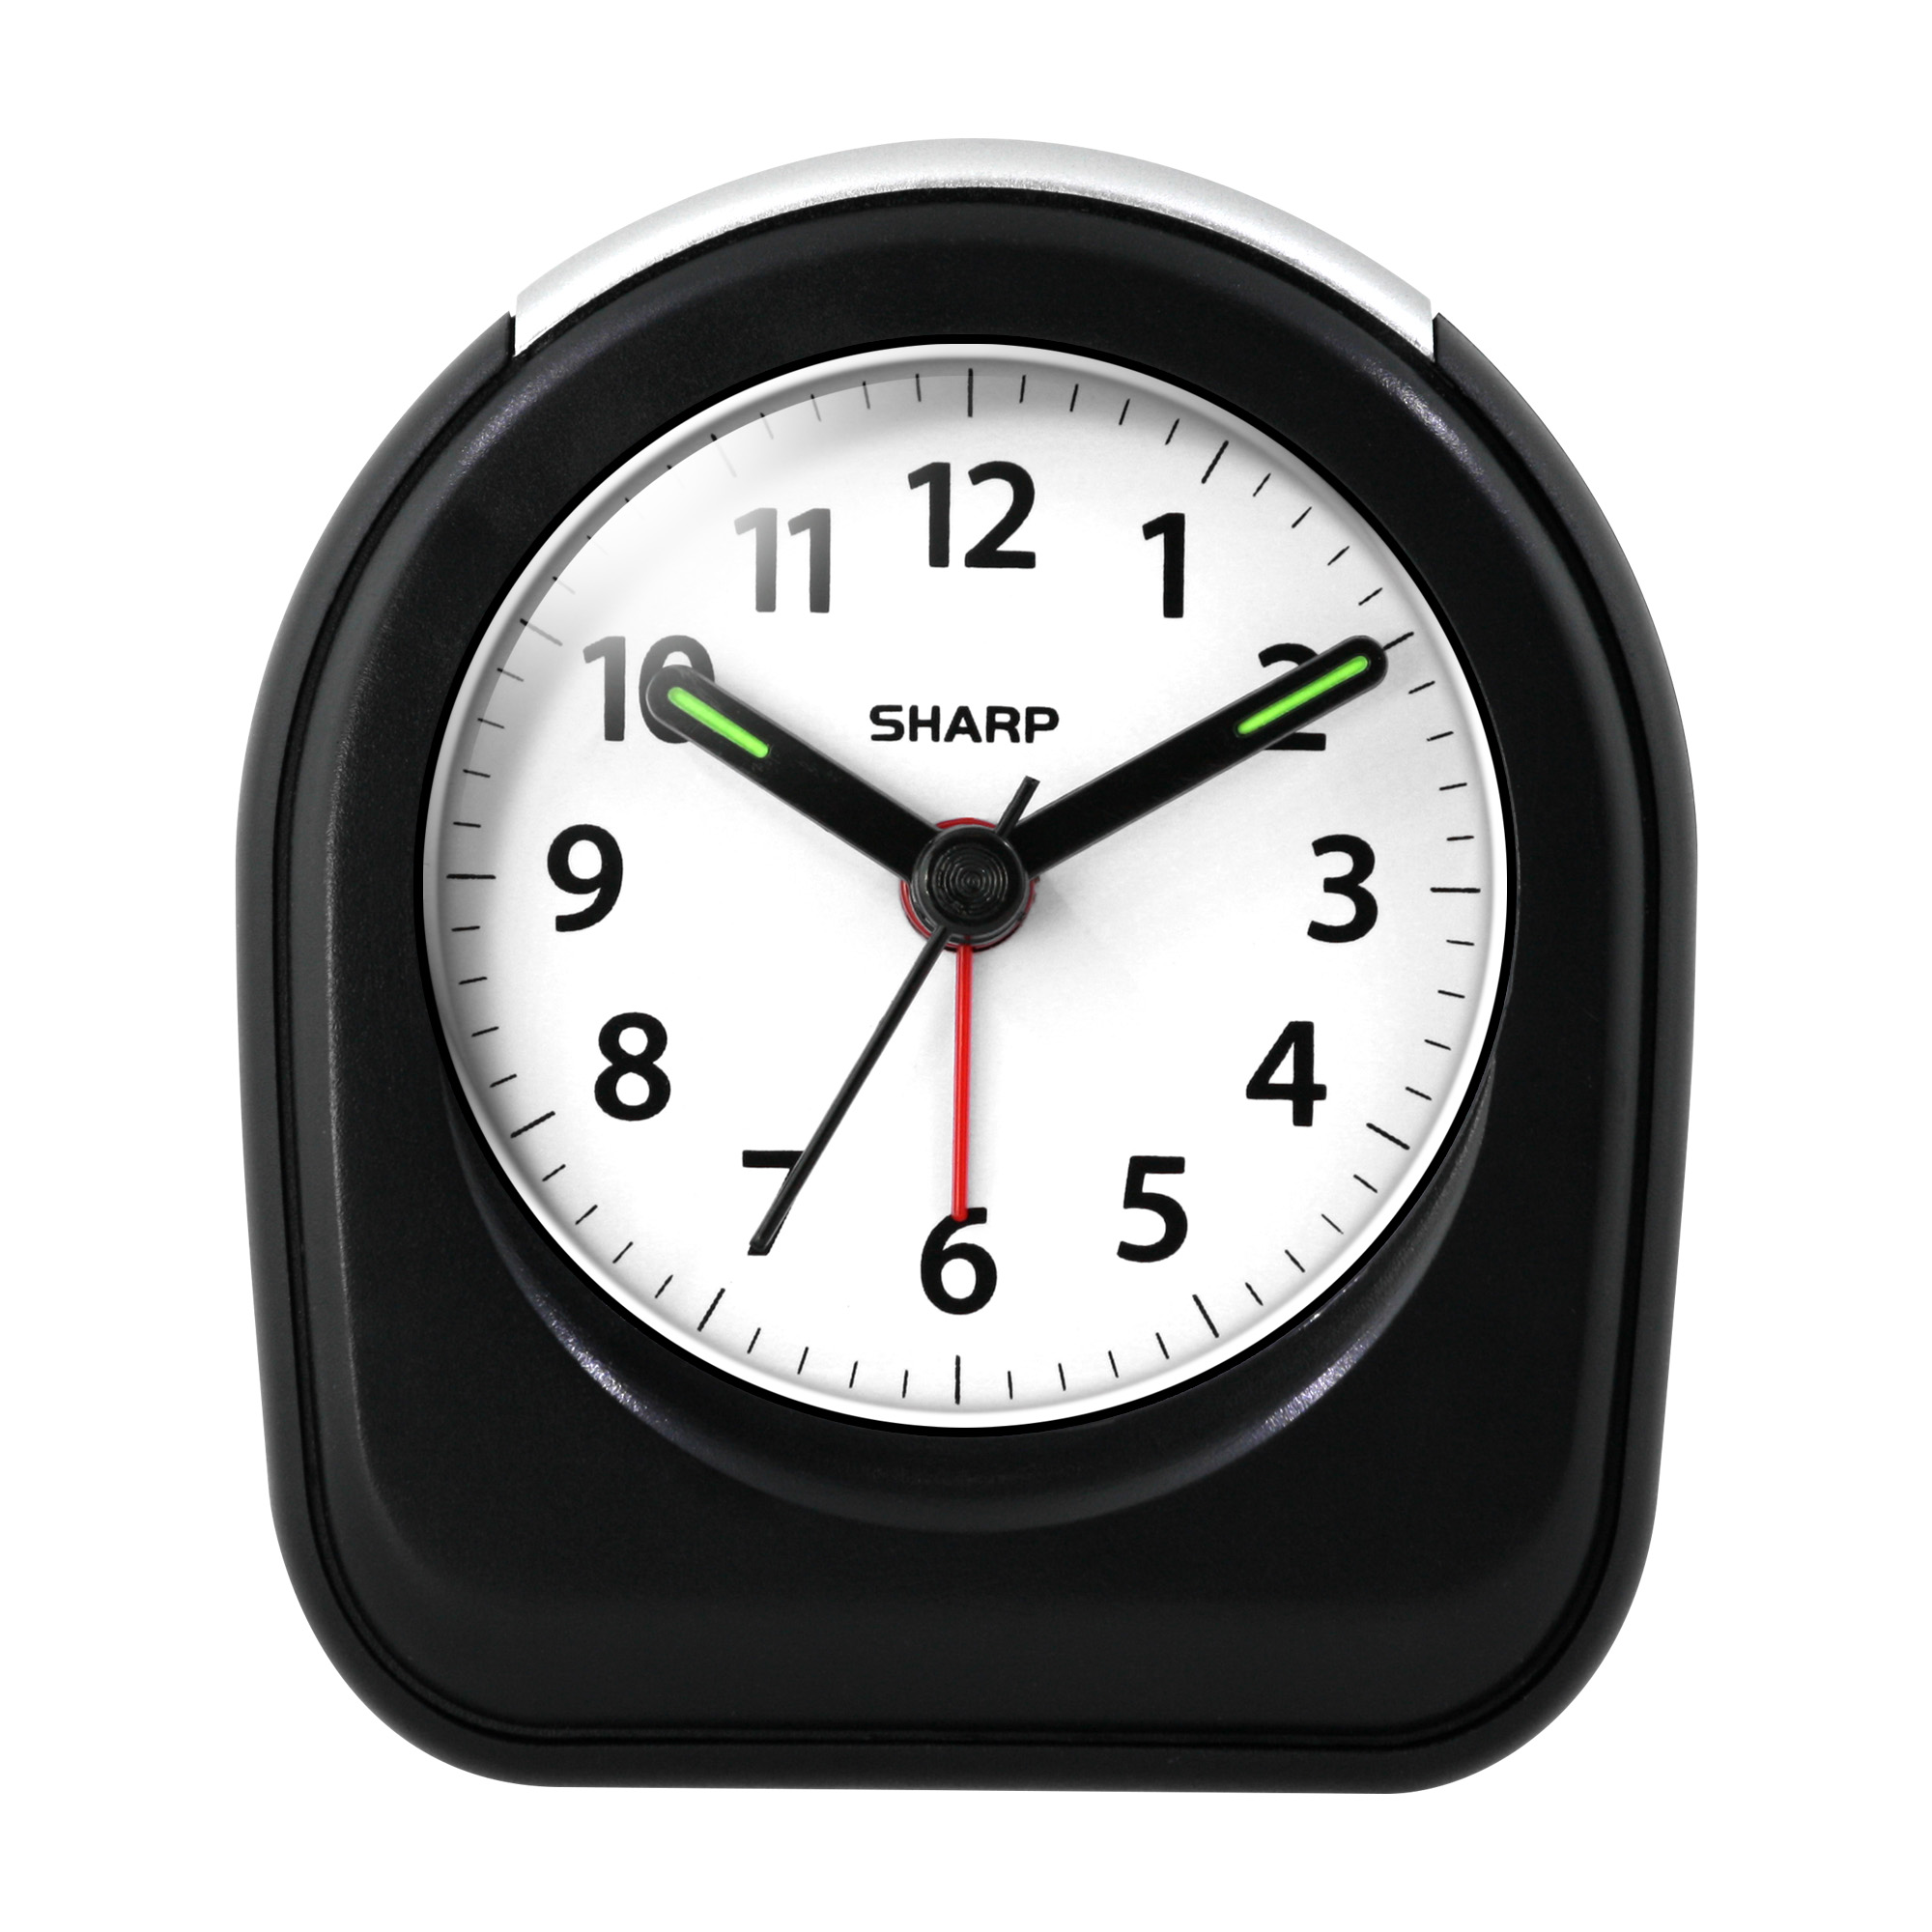 SHARP Quartz Analog Arch Alarm Clock, Black, Battery Operated, Small, Travel Clock - image 1 of 6